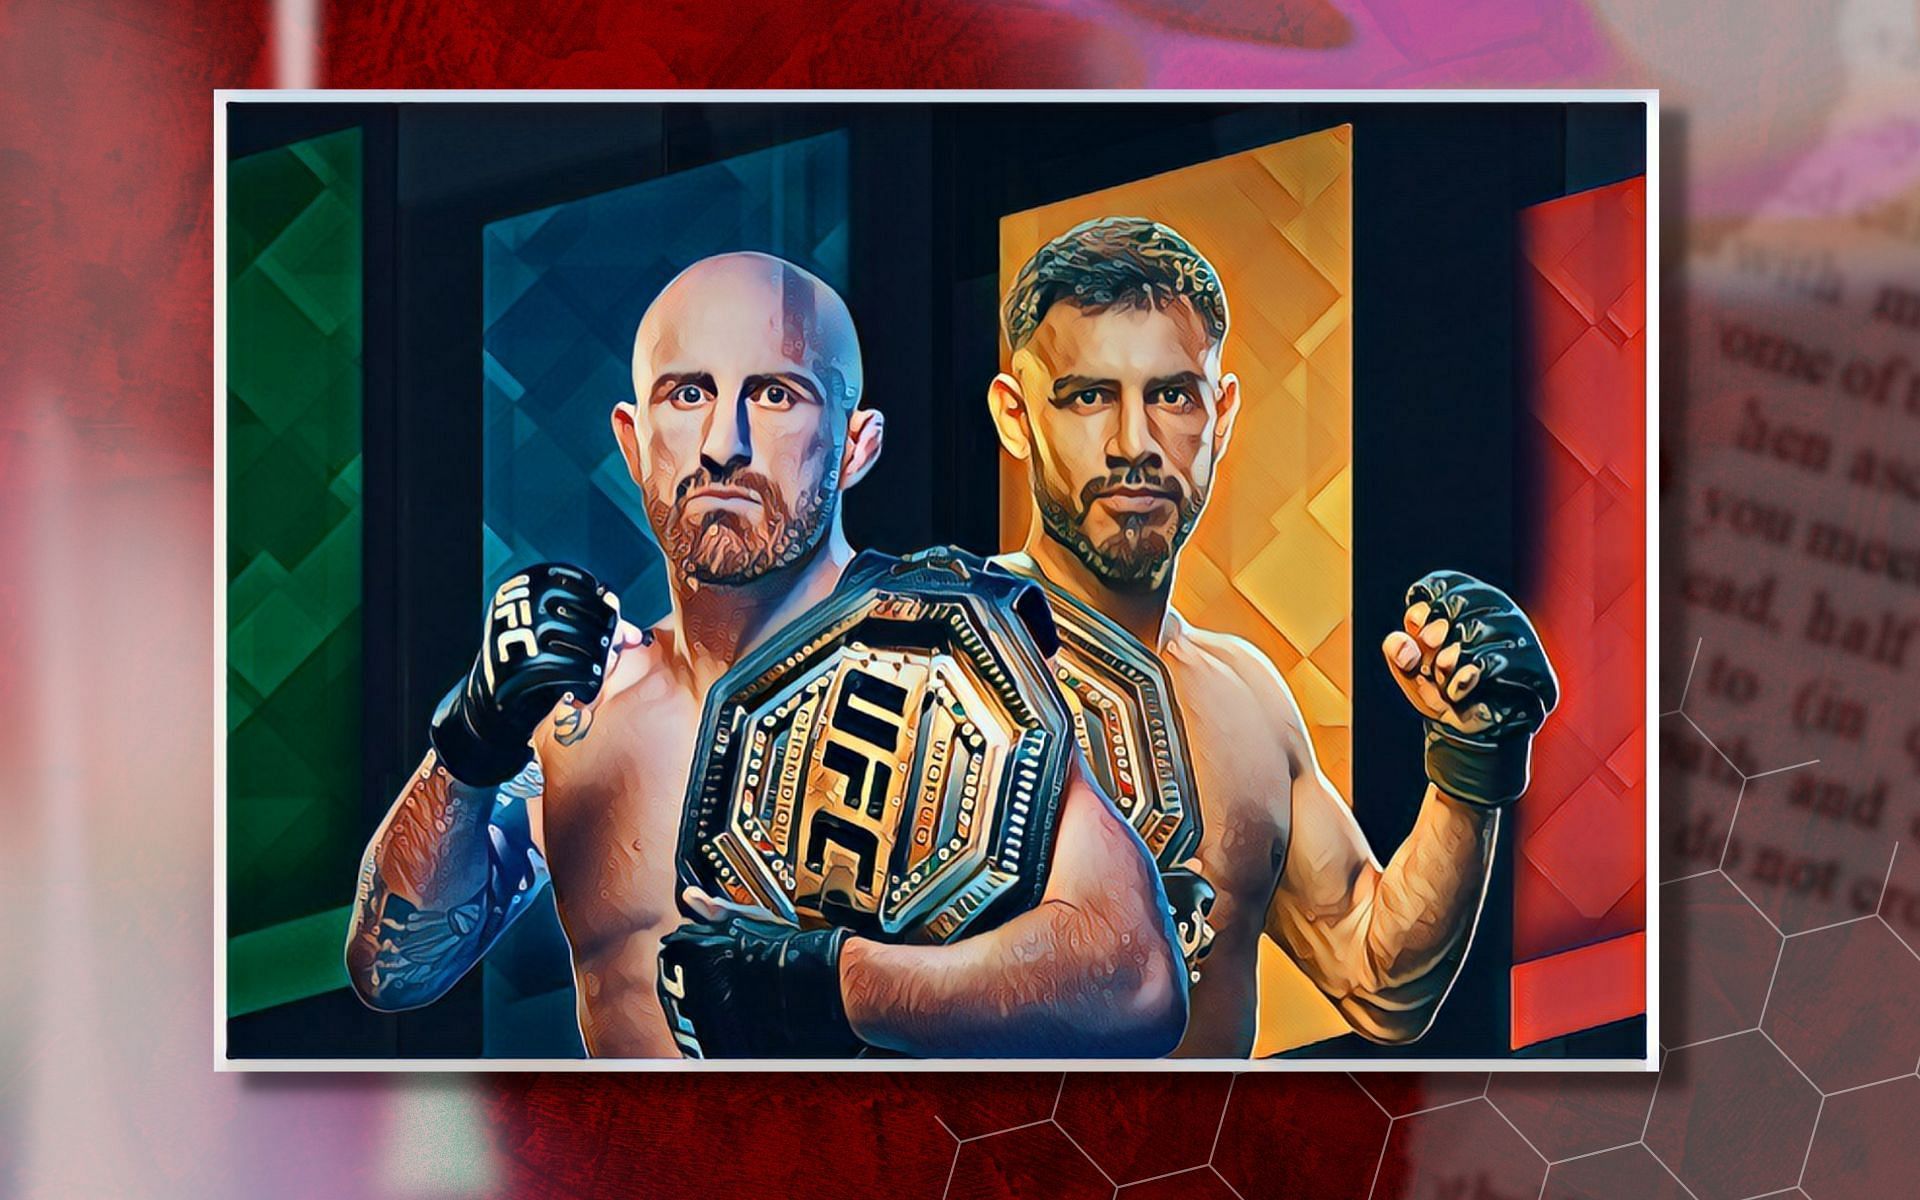 UFC 290 judges and referees revealed. [Image credits: ufc]